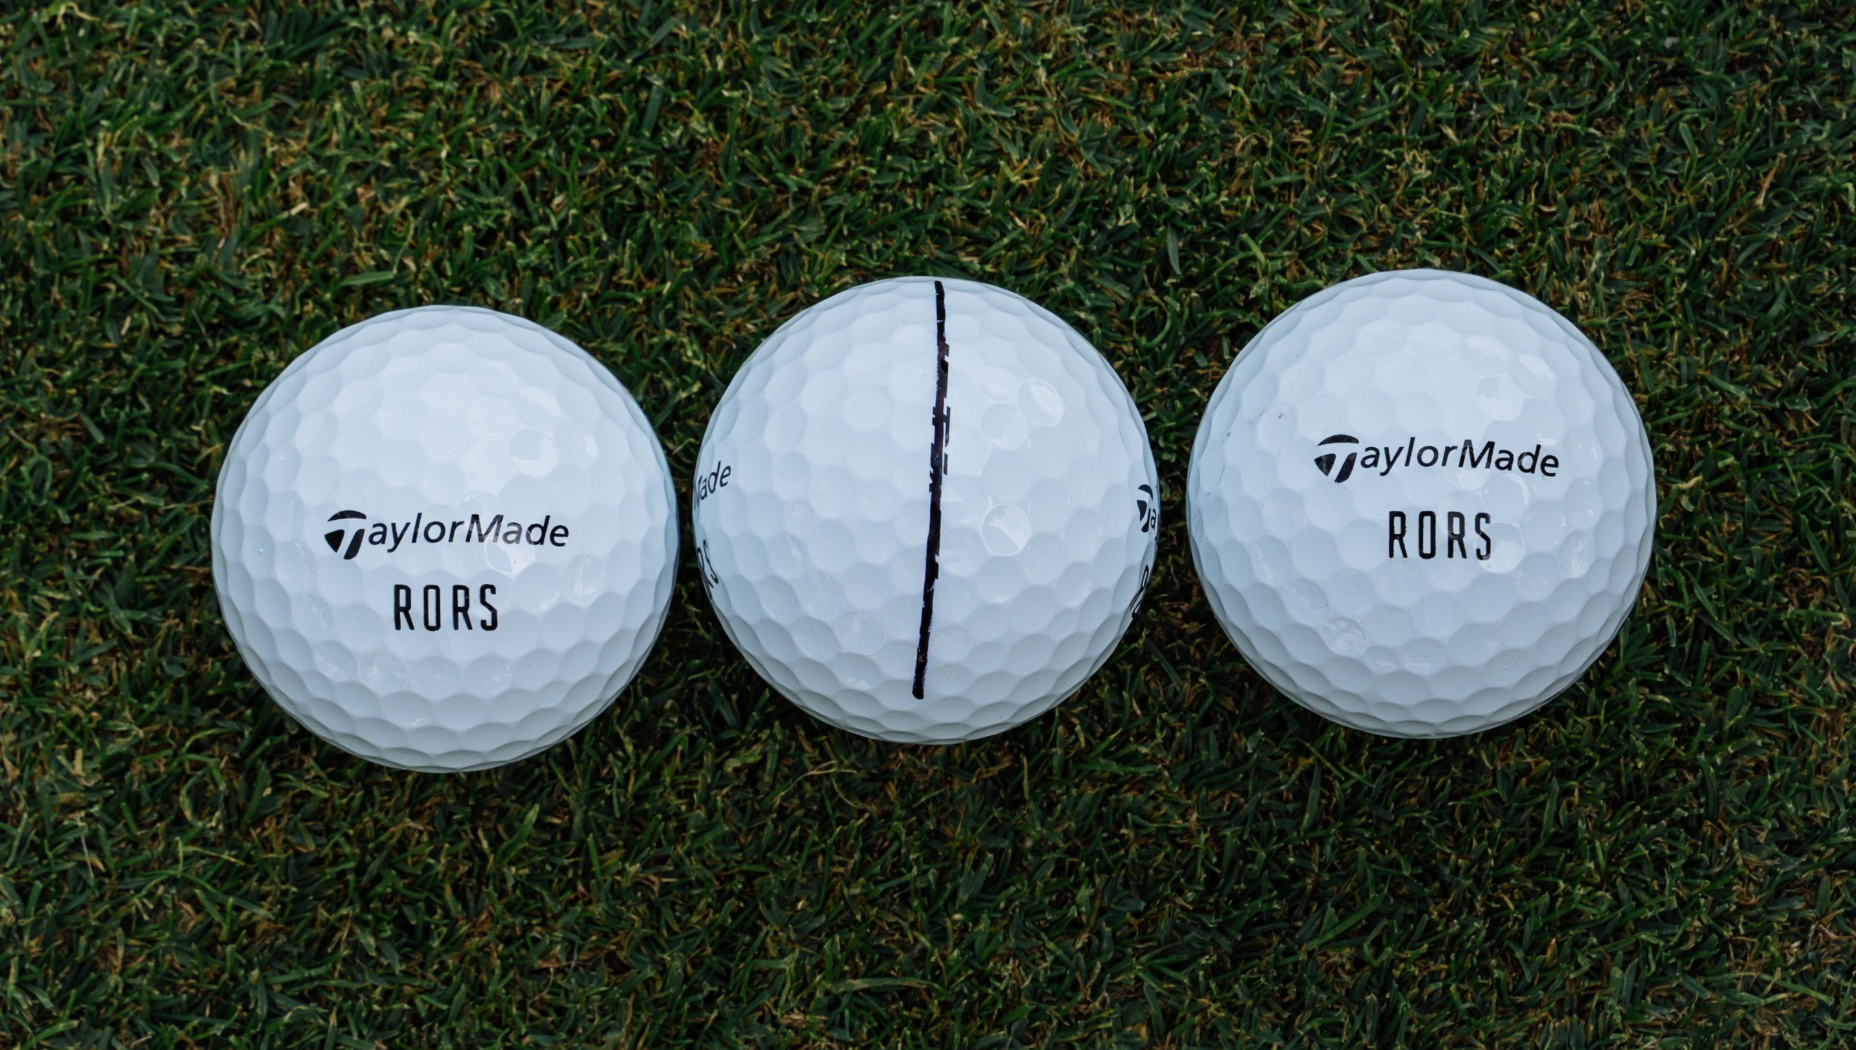 Rory RORS golf ball TP5X golf ball side